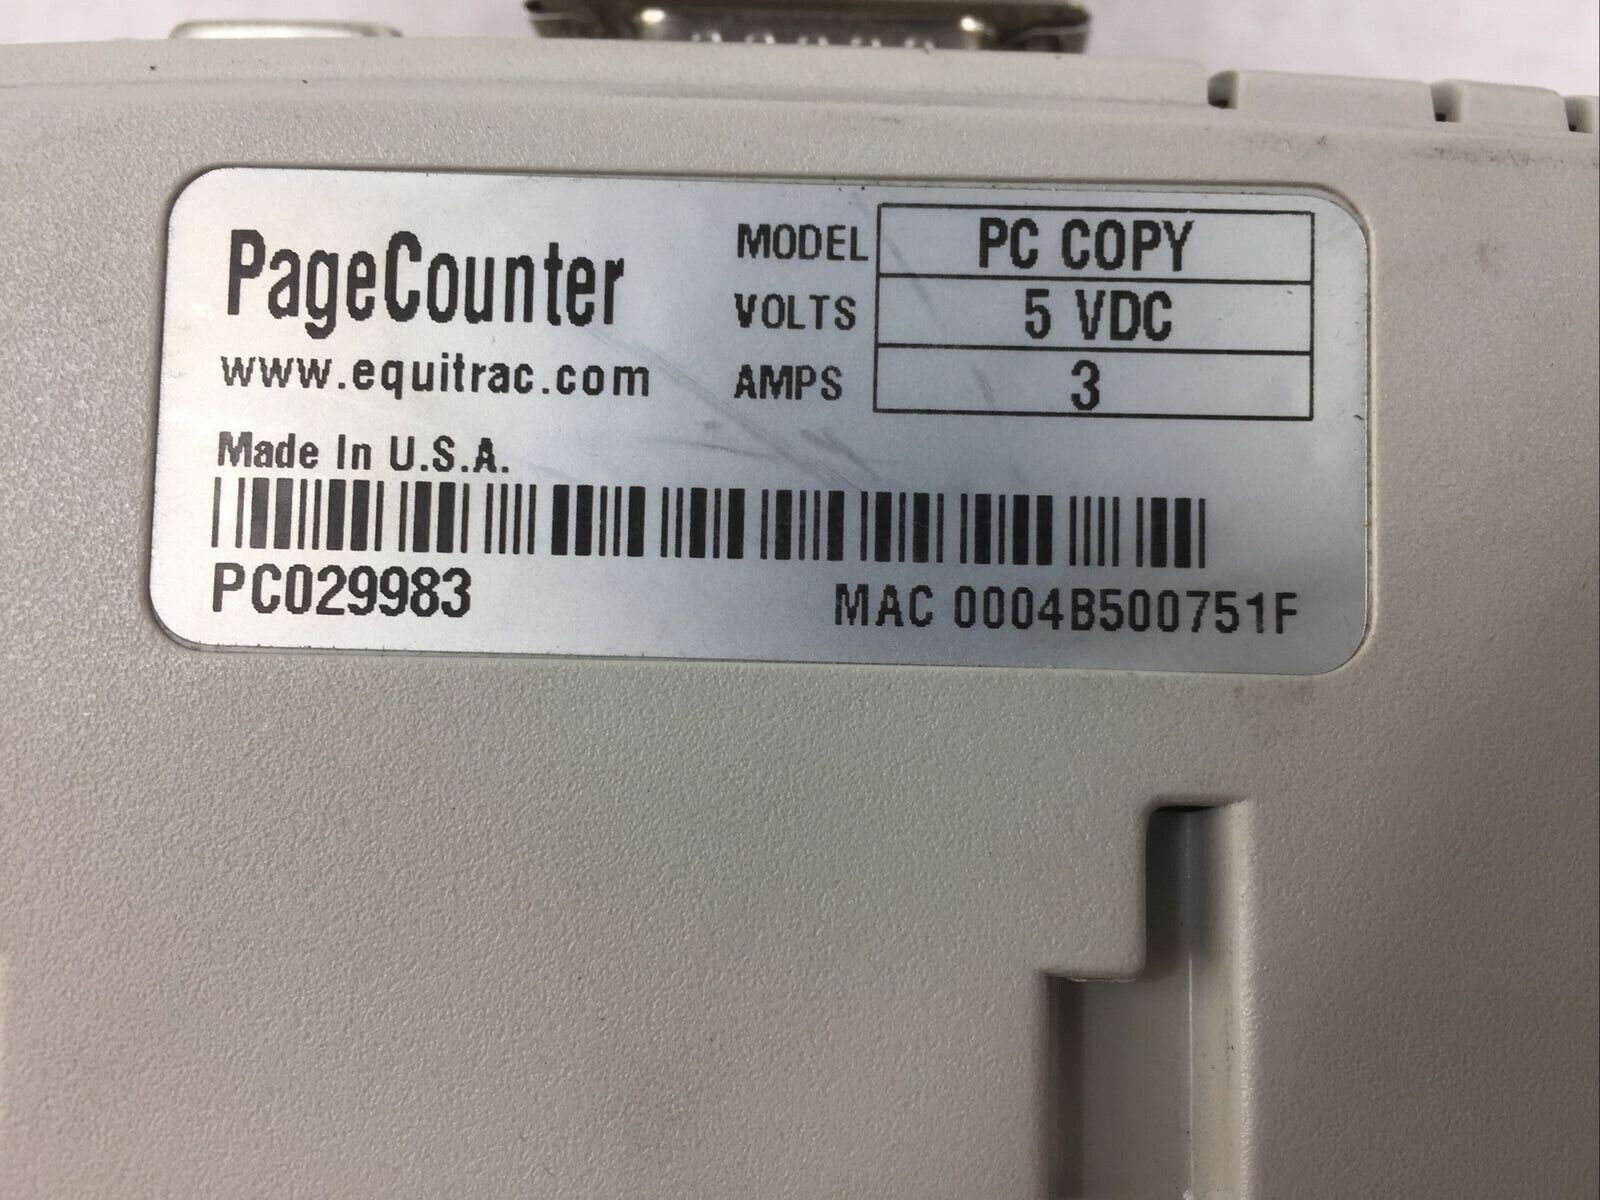 Equitrac PageCounter Model PC Copy